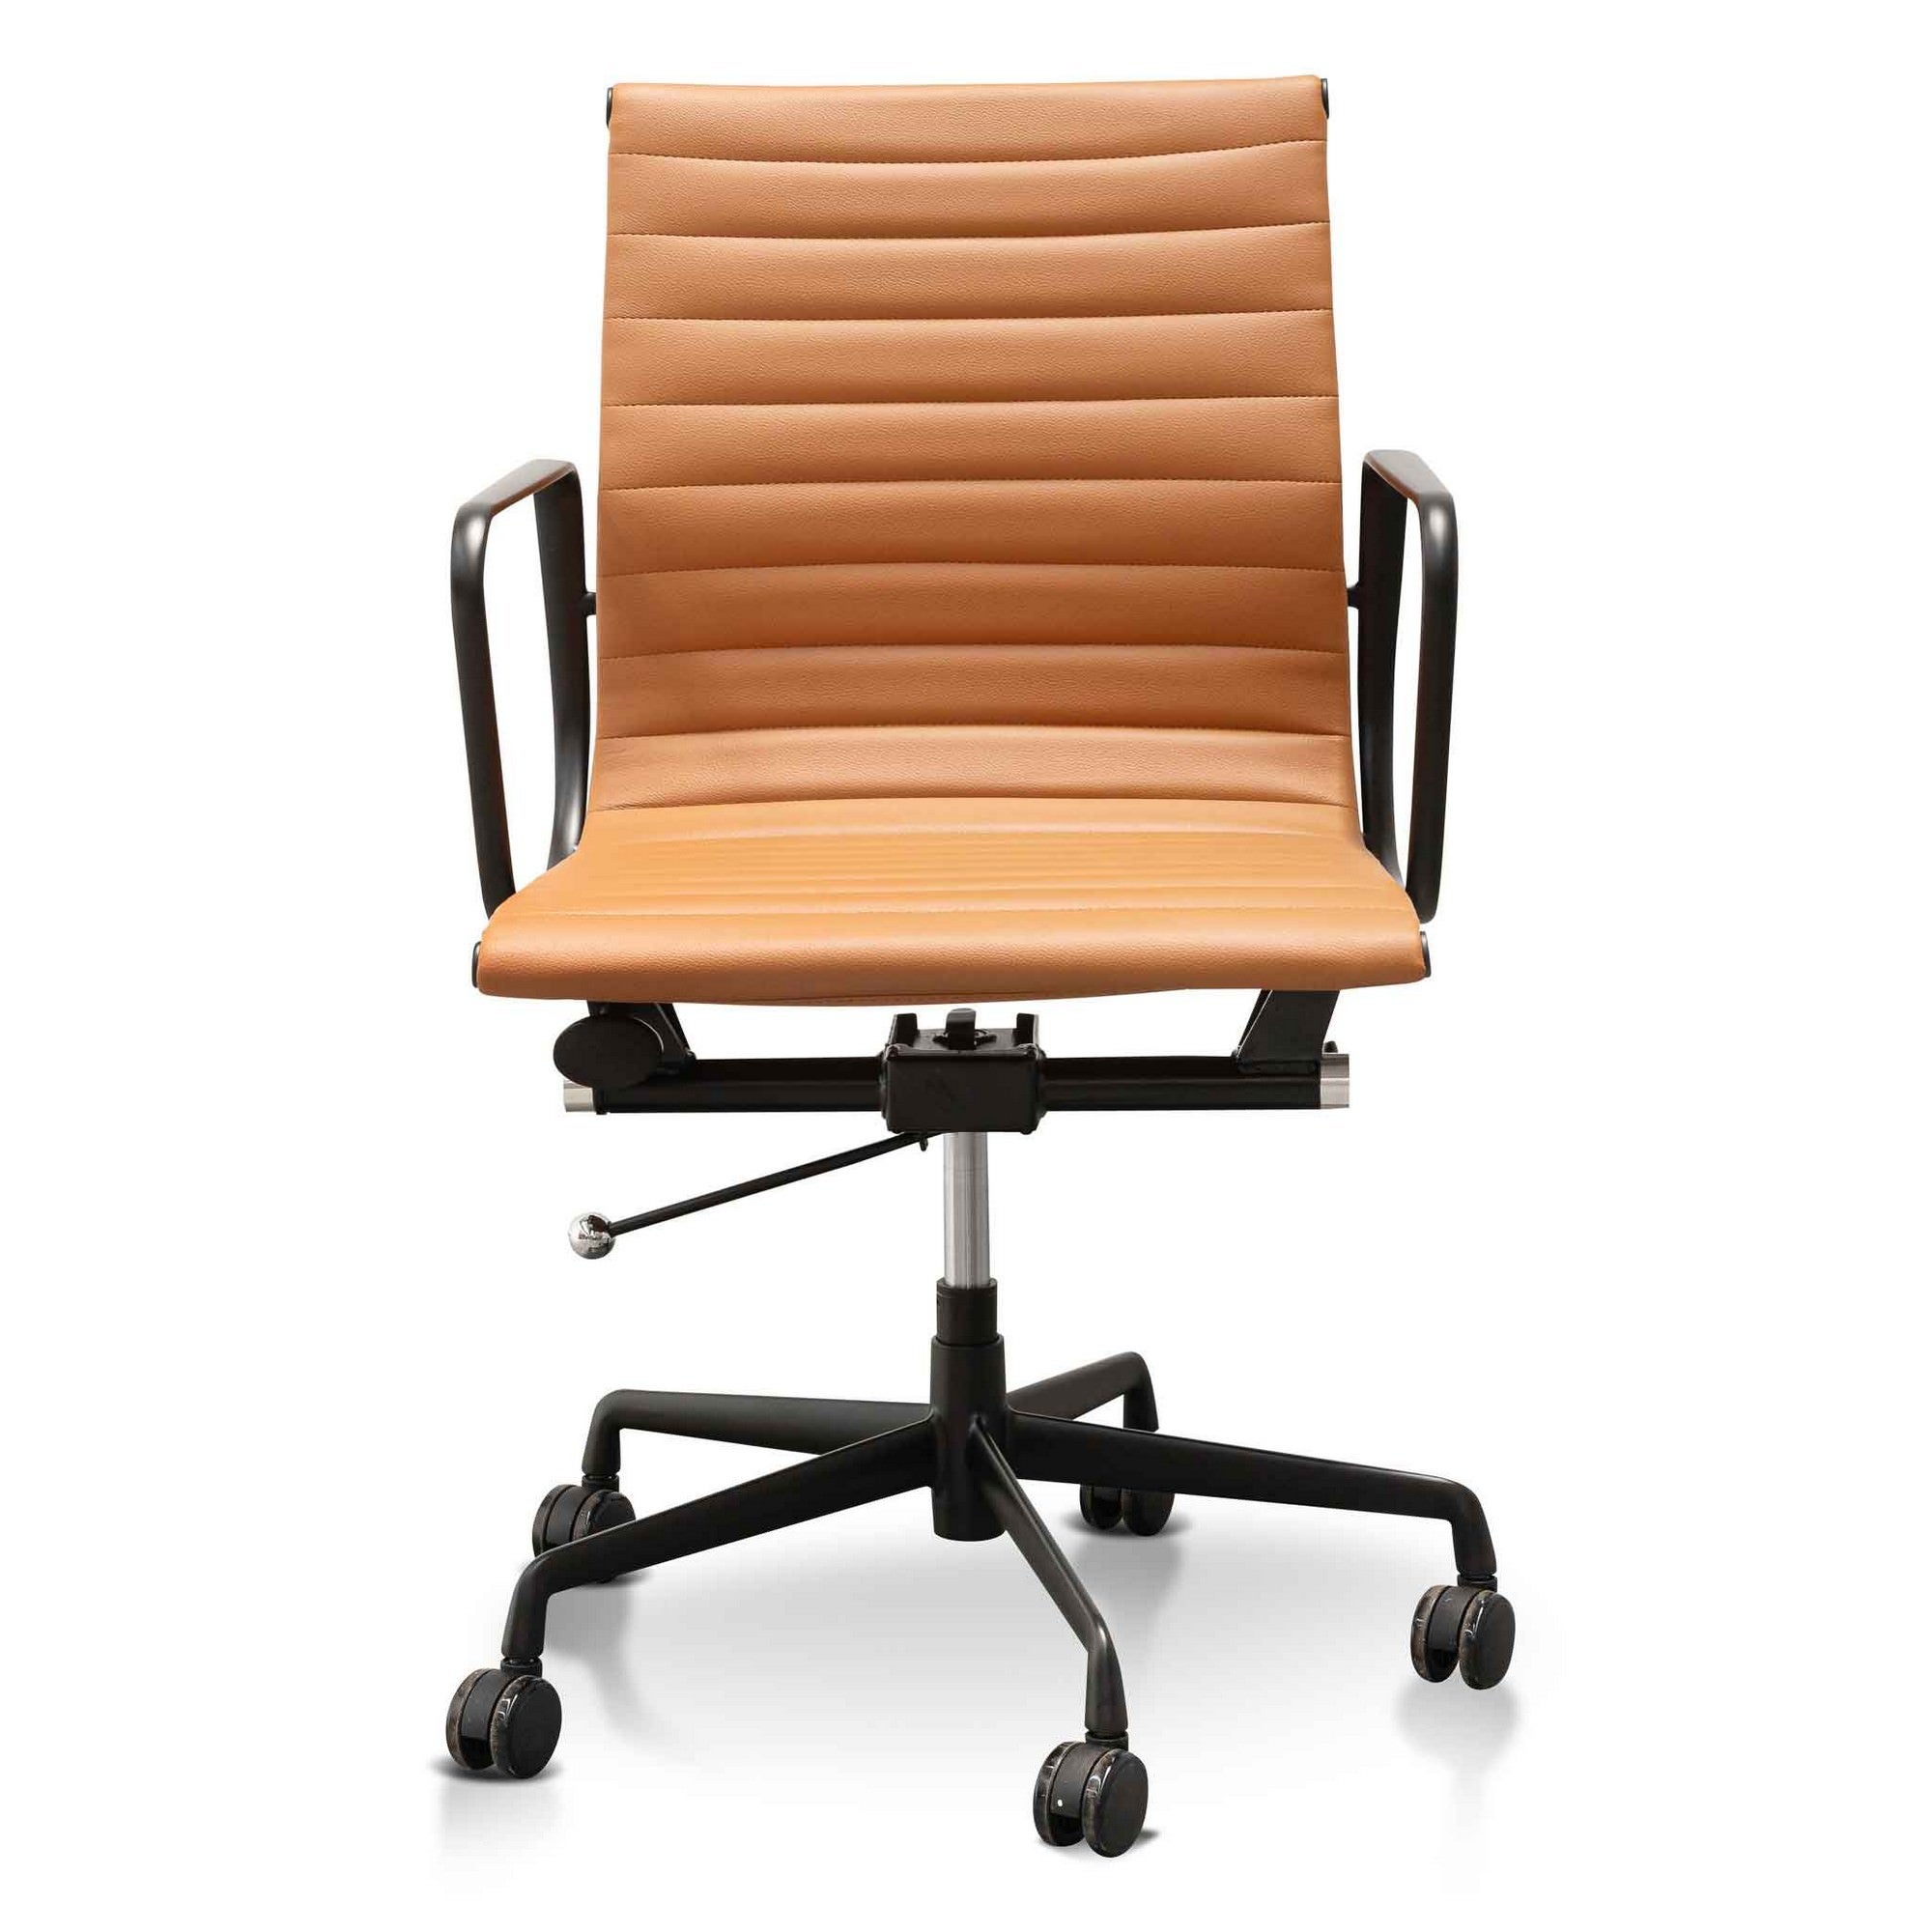 Conimbia Italian Leather Replica Eames Office Chair, Tan